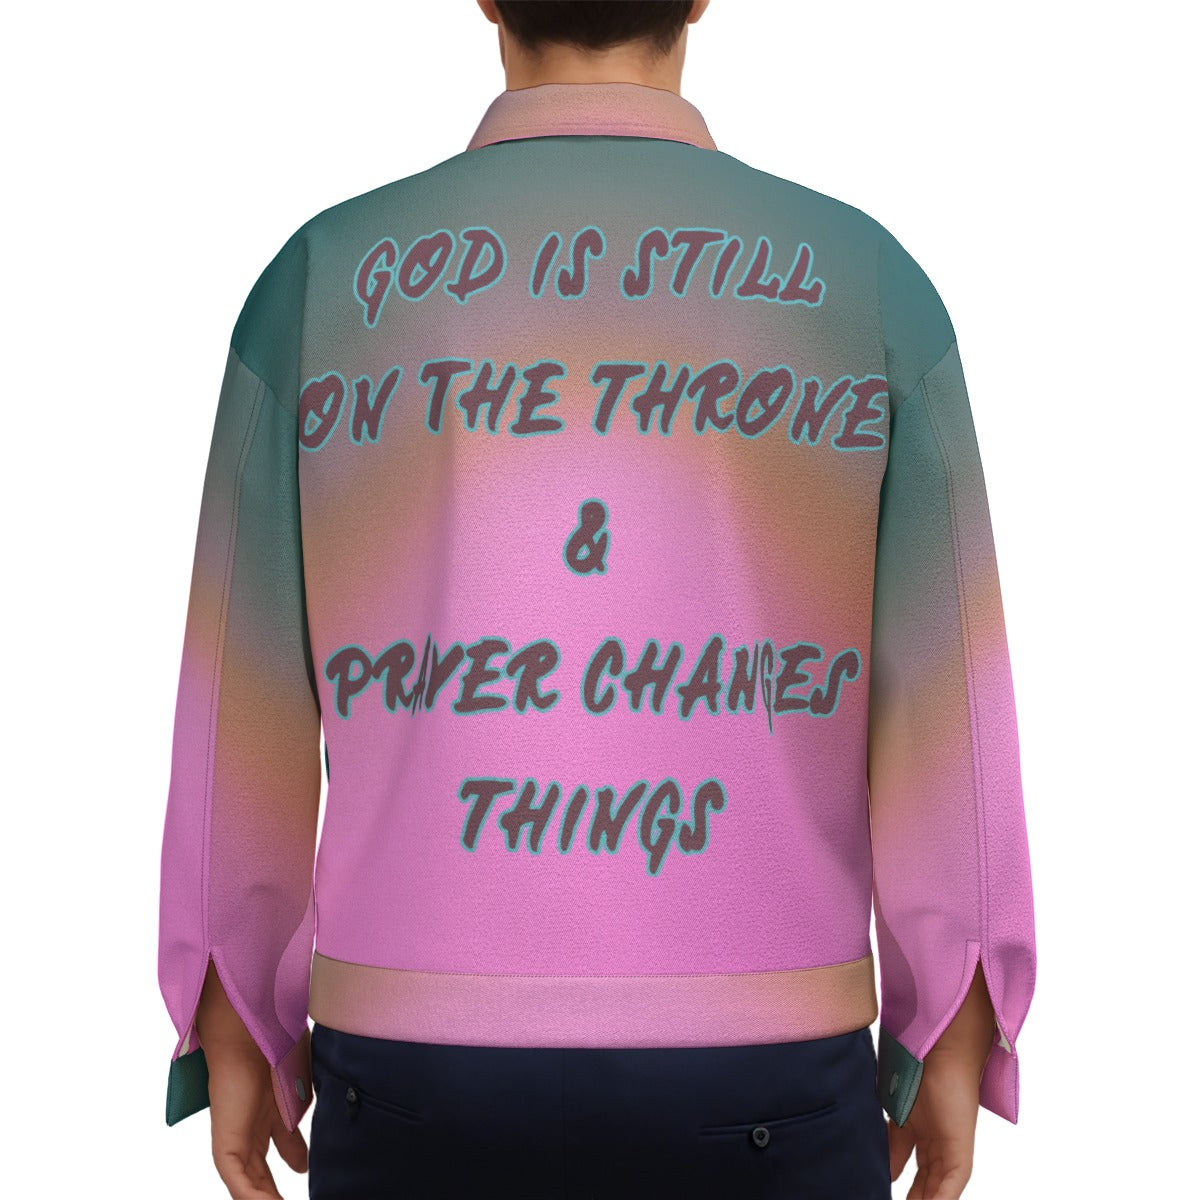 God is still on the throne Lapel Jacket